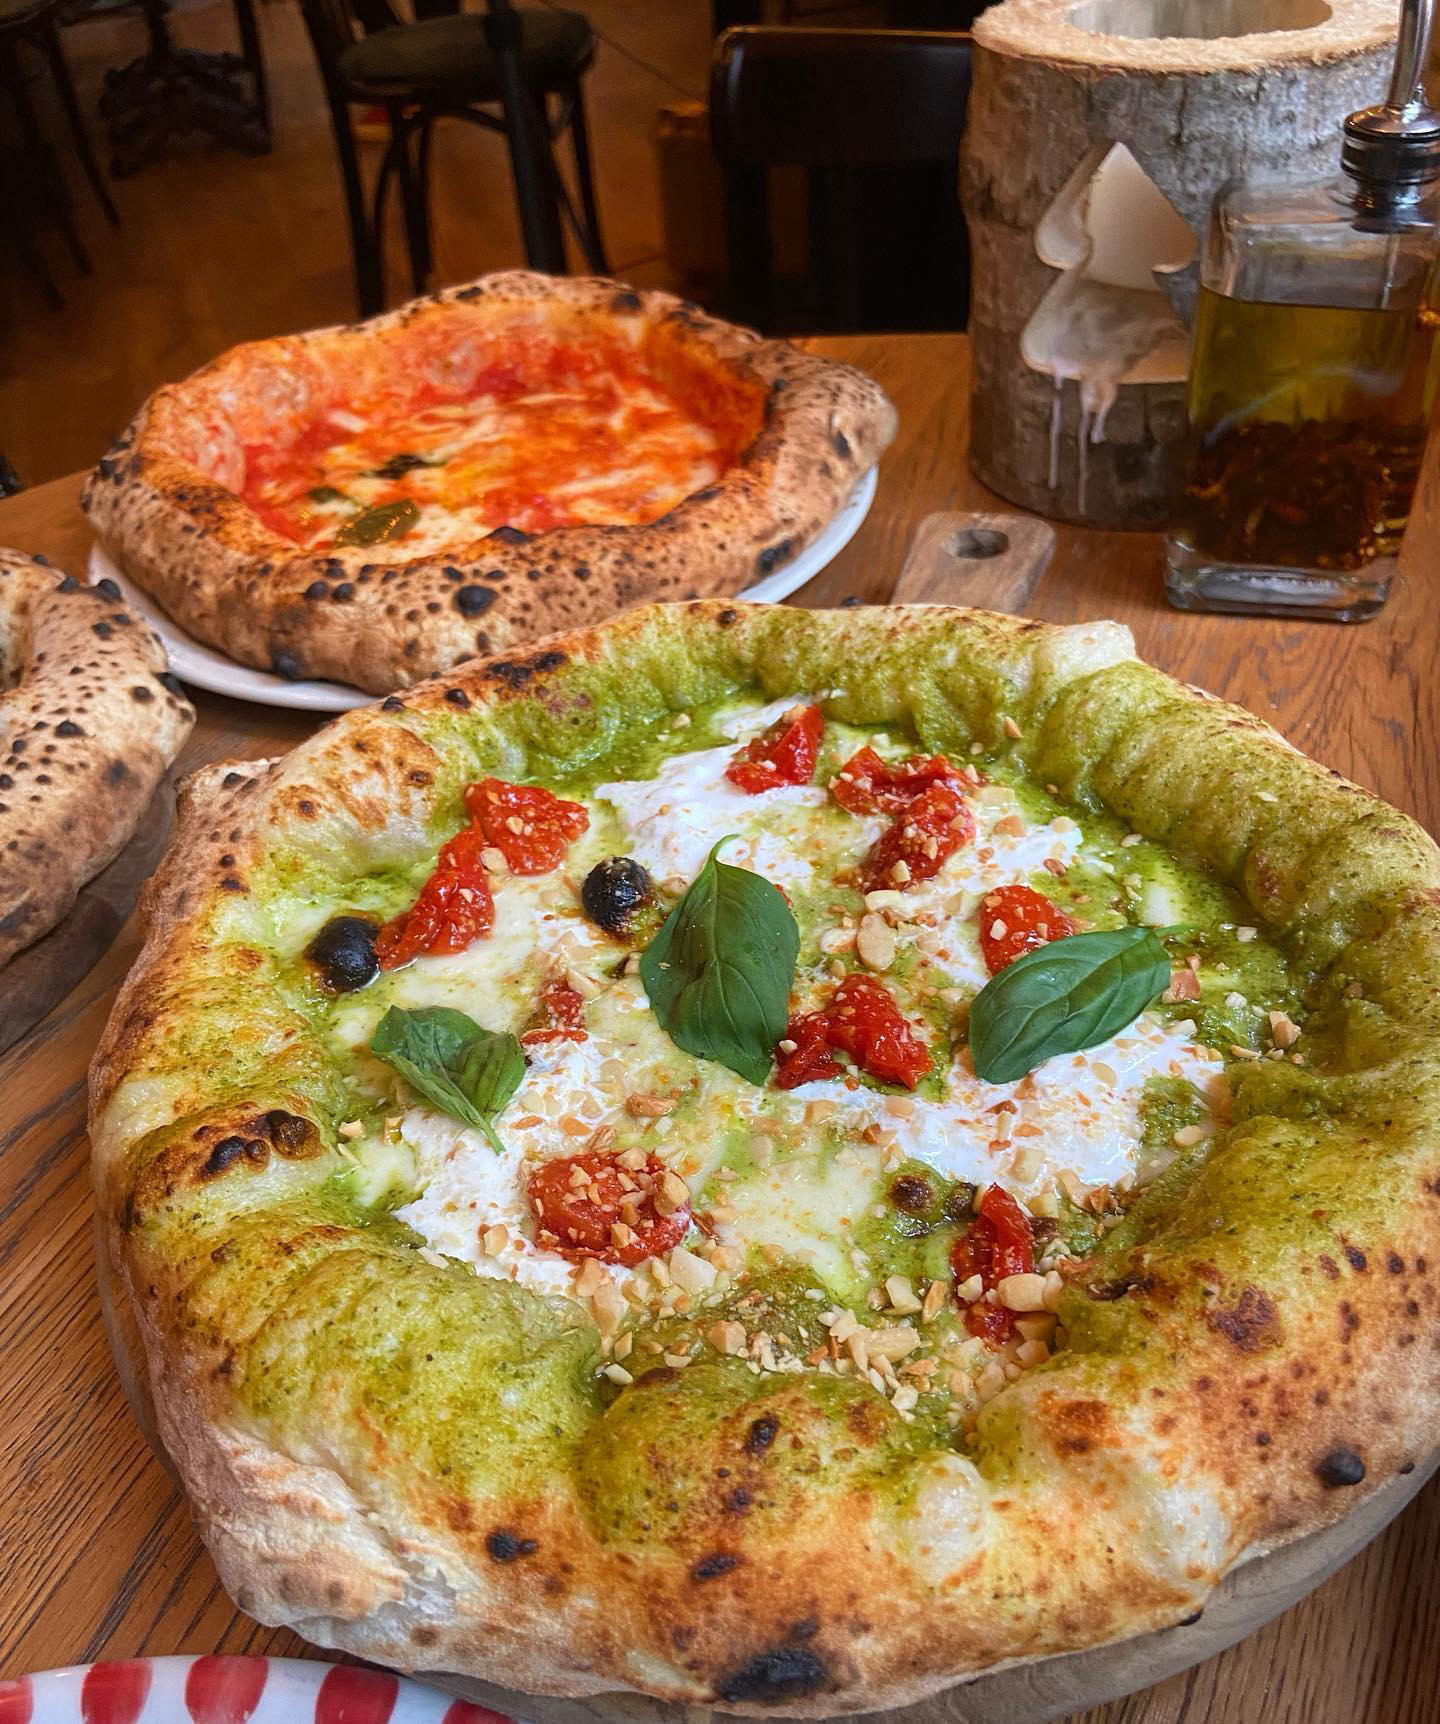 Peppe pizzeria napoletana - On met en route le winter body